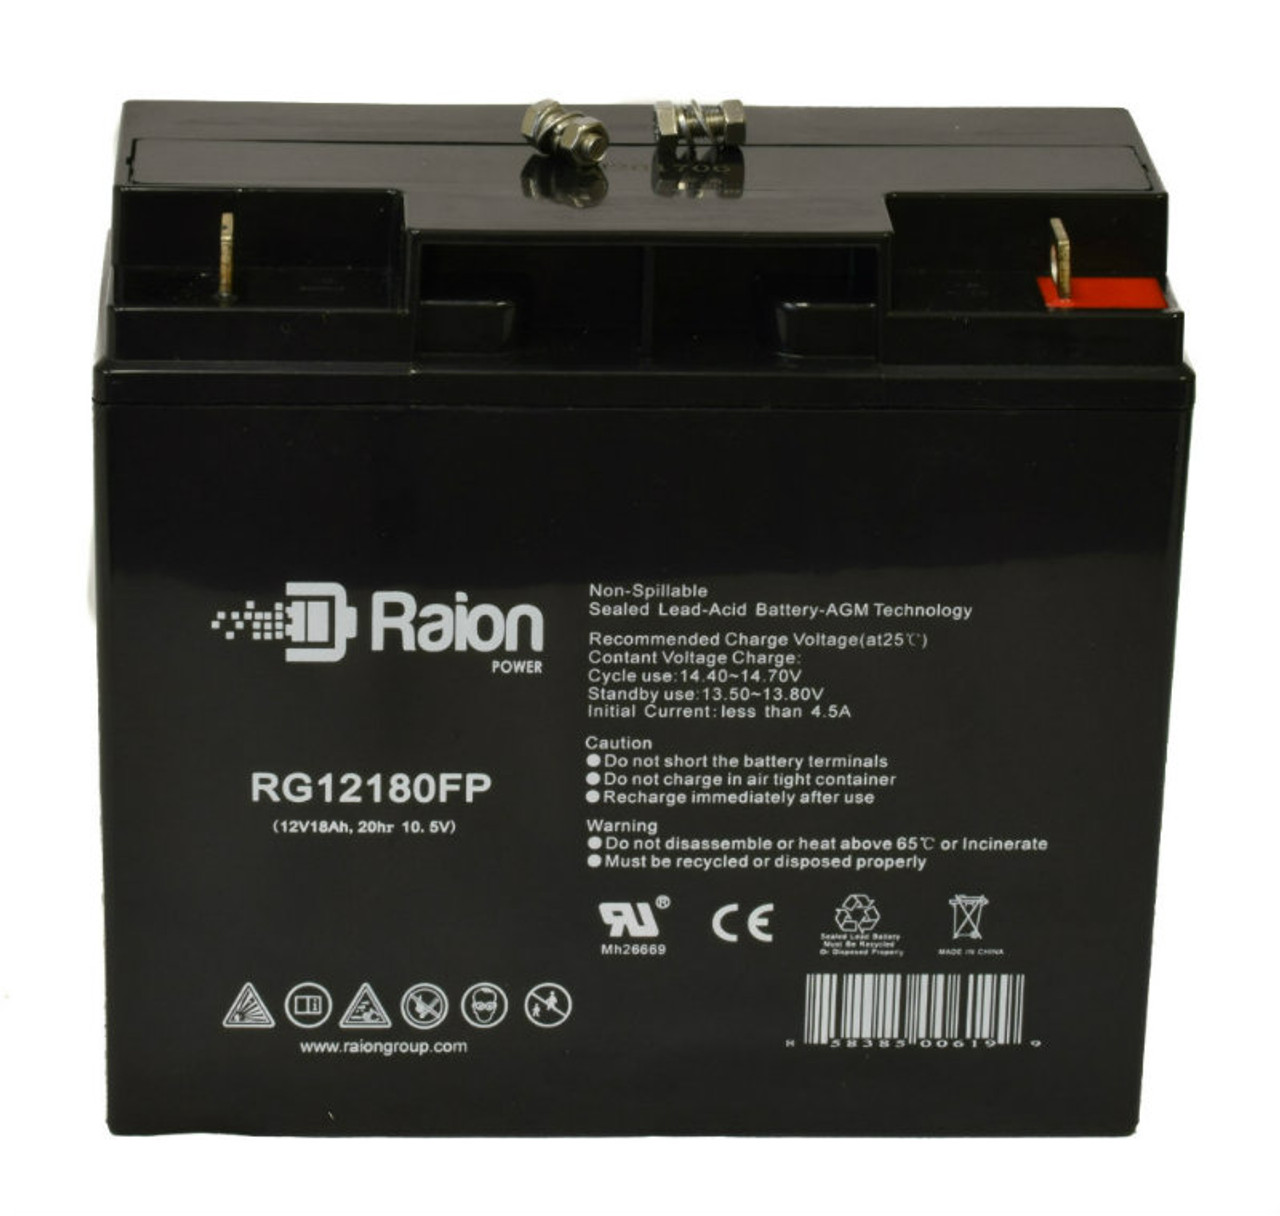 Raion Power RG12180FP 12V 18Ah Lead Acid Battery for Sentry Battery PM12200